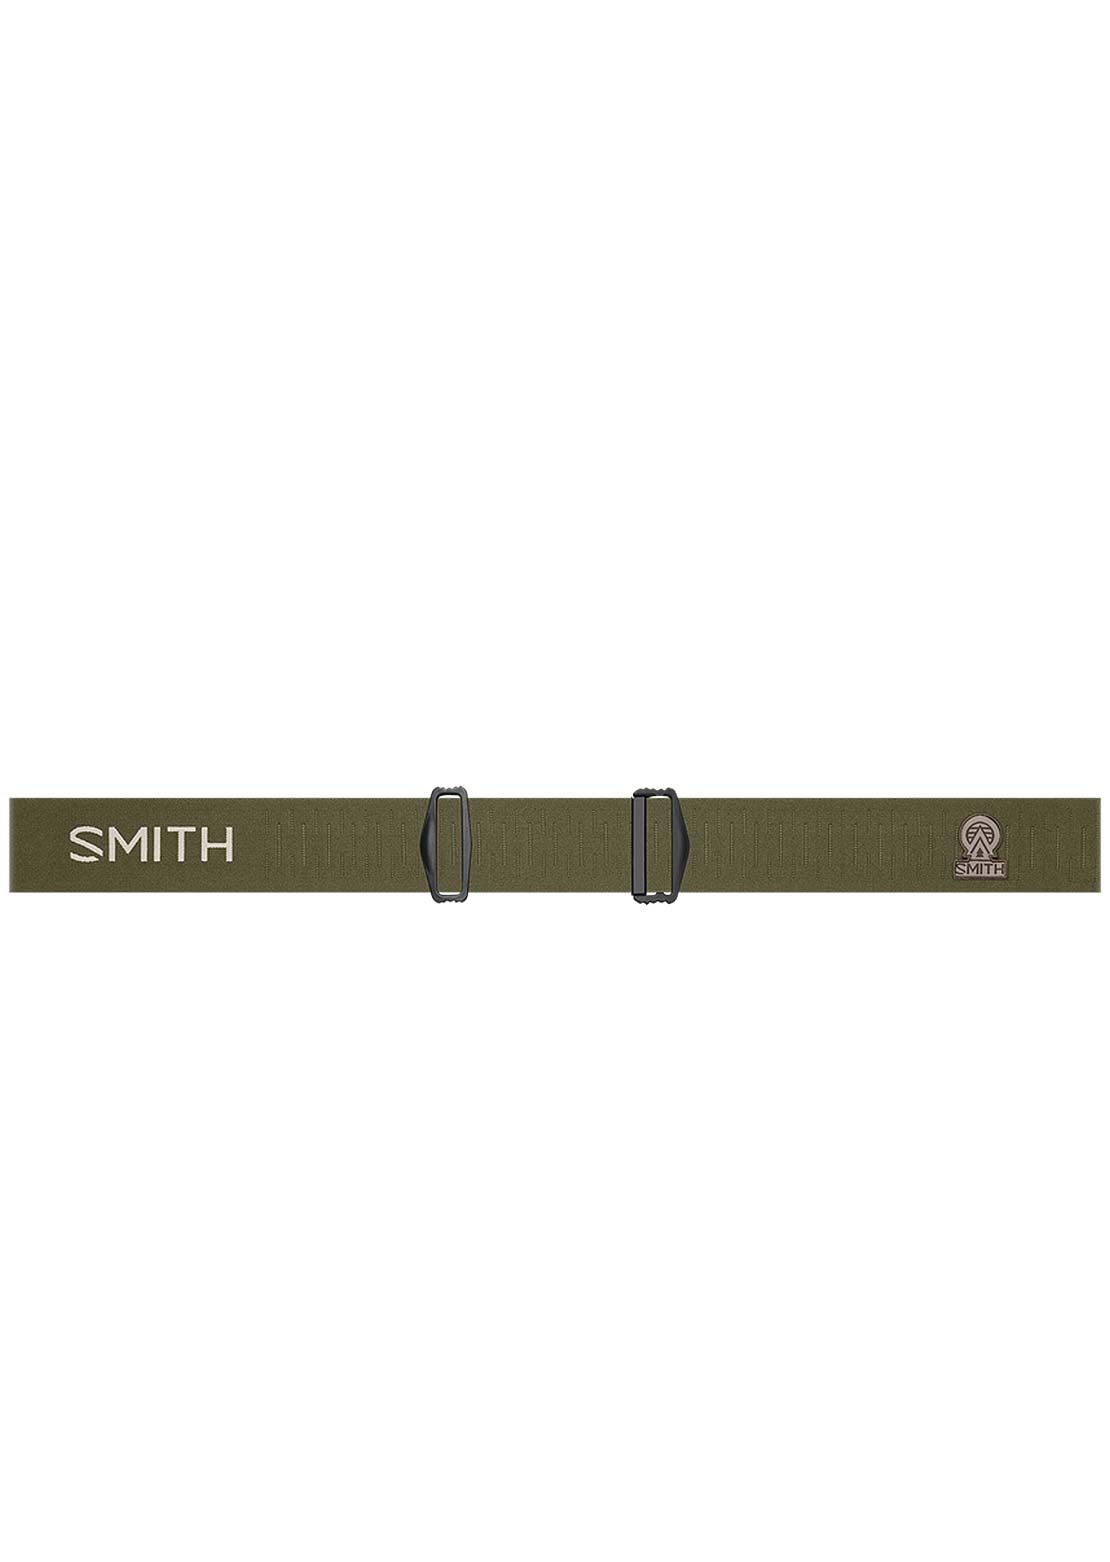 Smith Squad XL Goggles Forest/Chromapop Sun Platinum Mirror